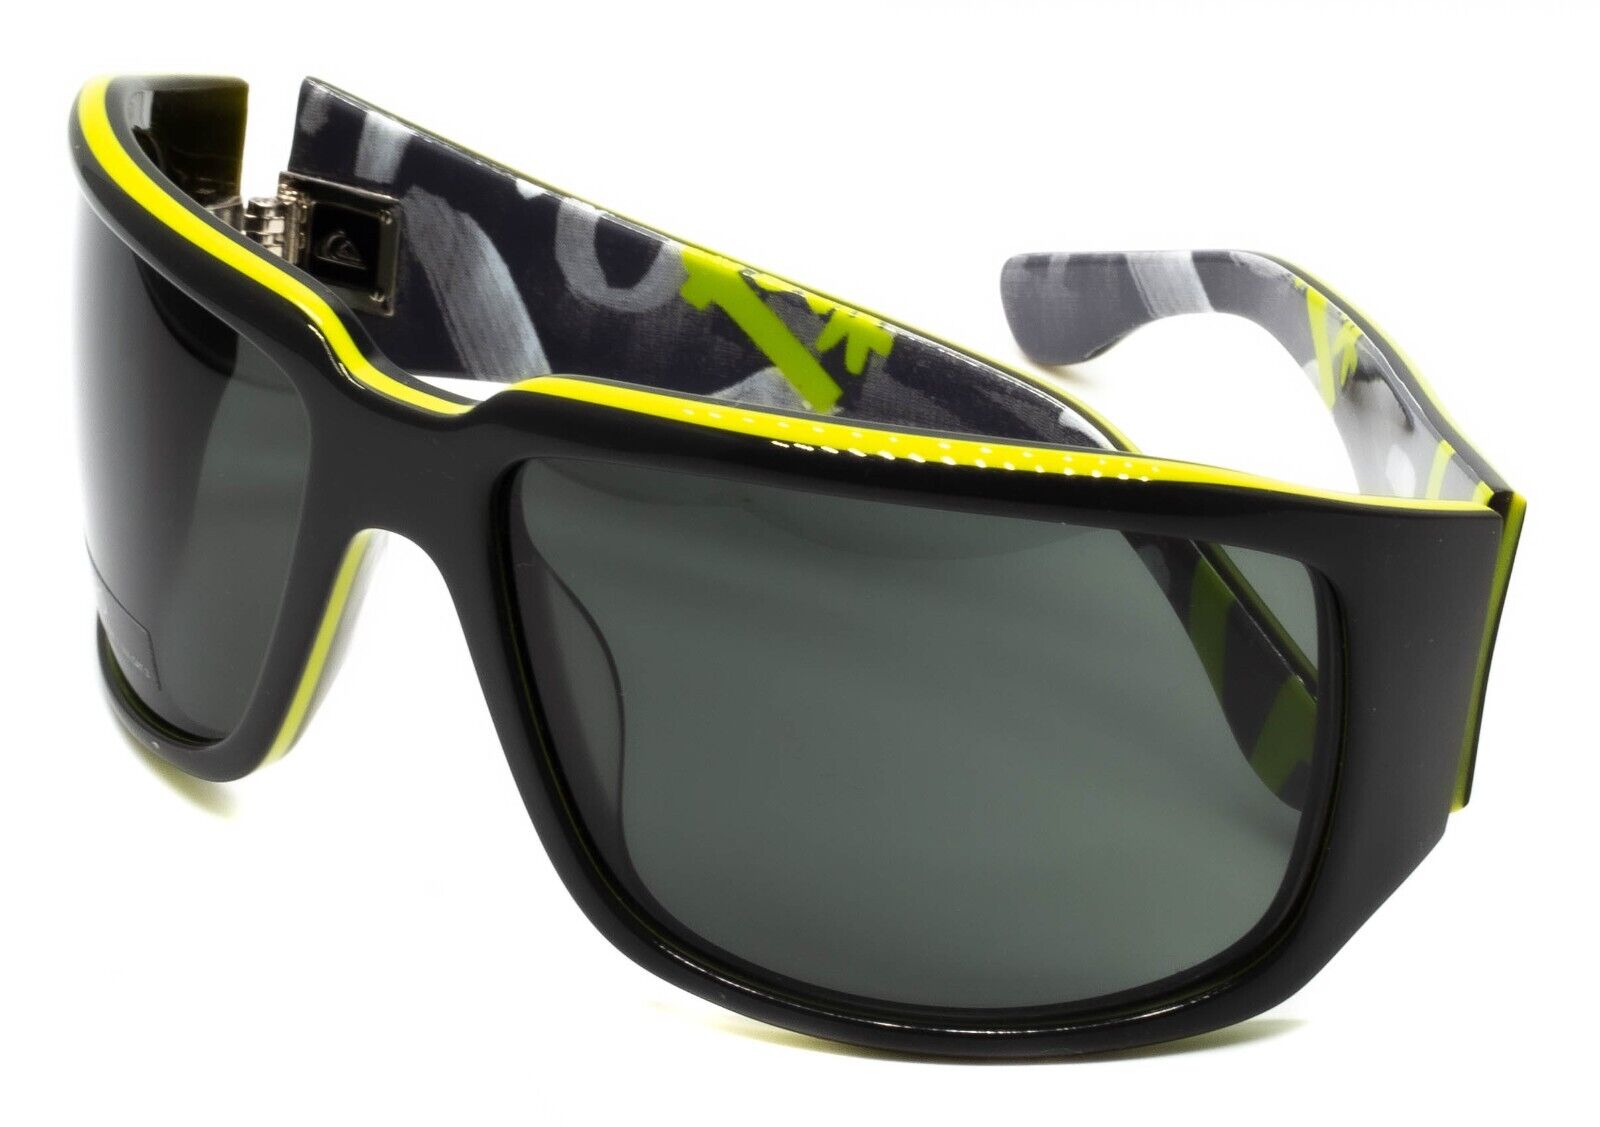 Eyewear - EQS1104/XSSG GGV Glasses Sunglasses Eyewear 64mm CAT 3 UV DINERO QUIKSILVER Shades